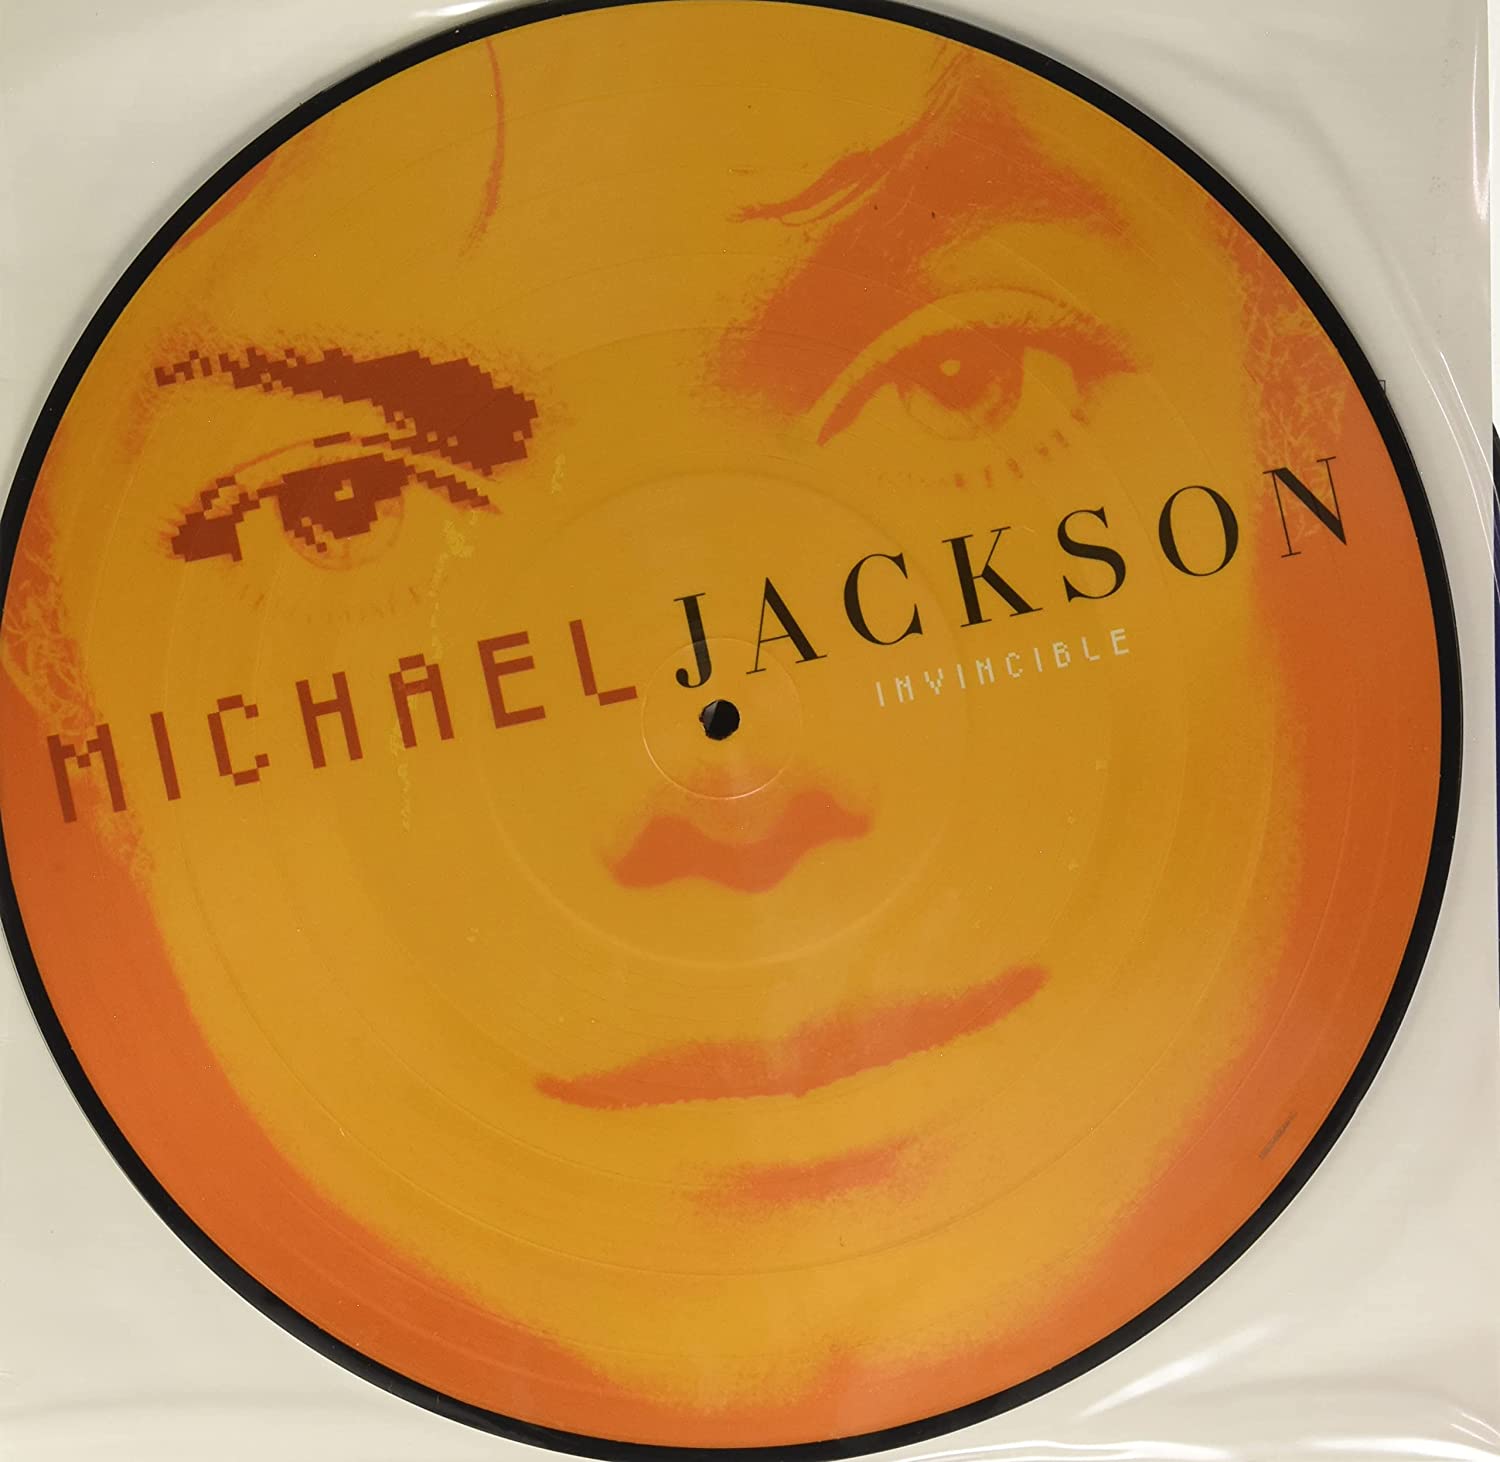 Invincible | Michael Jackson - Vinyl.ae